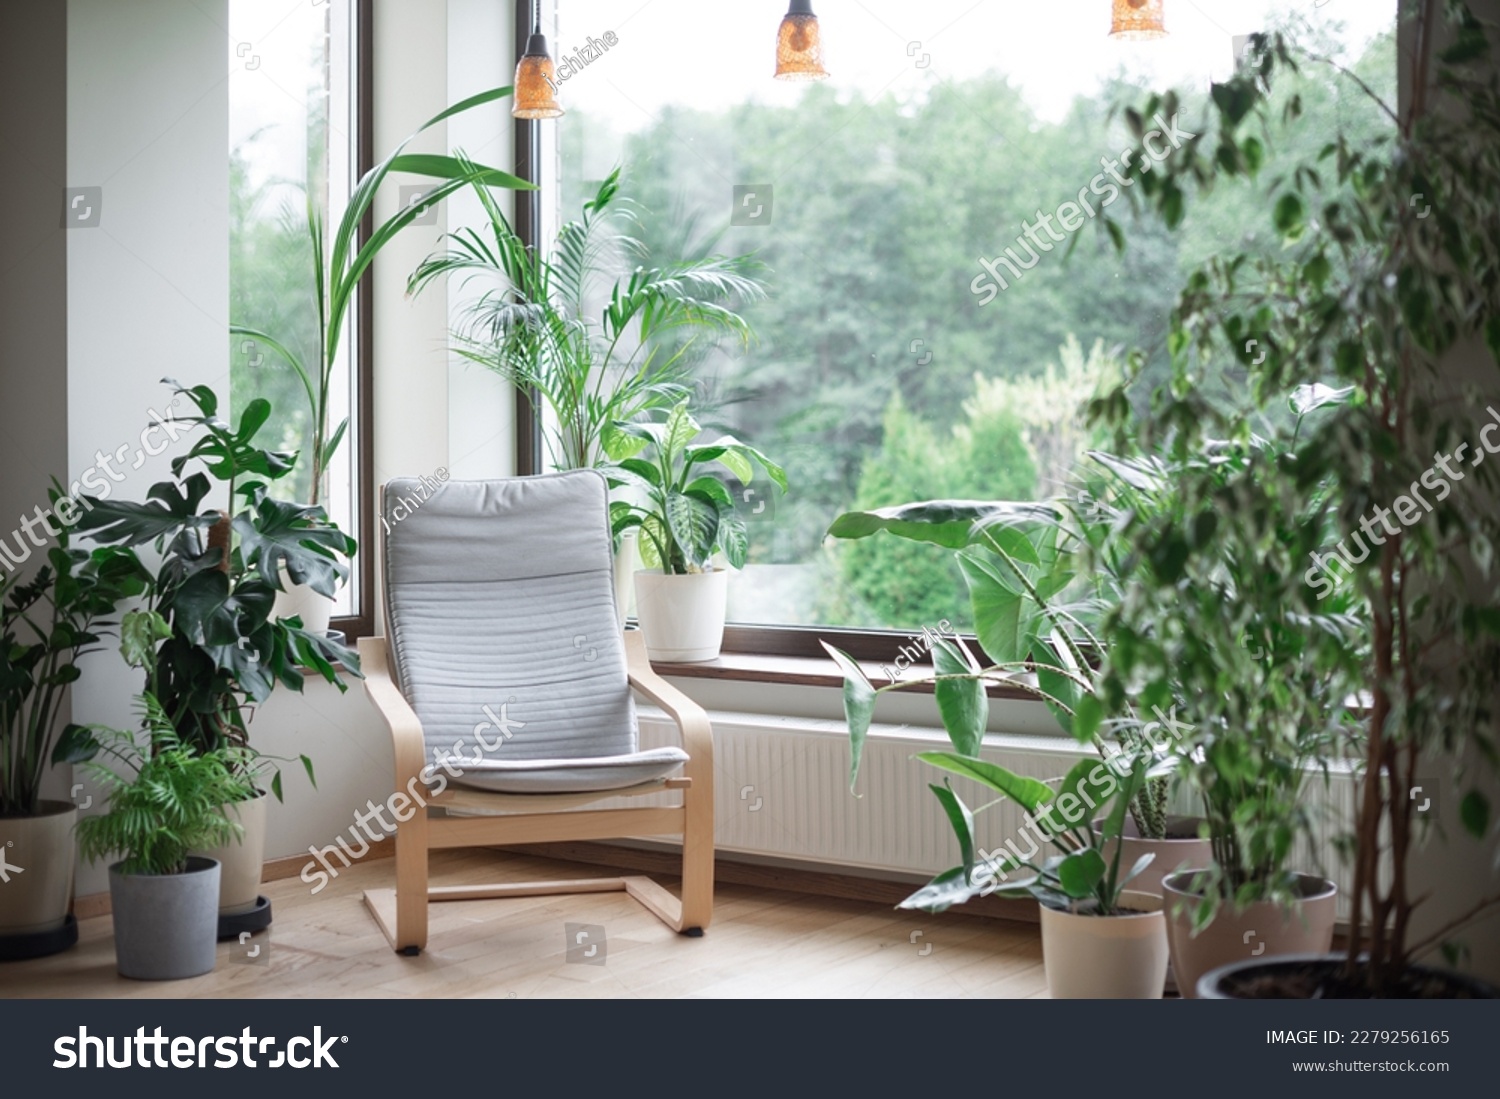 Grey armchair, indoor plants, monstera, palm trees. Urban jungle apartment. Biophilia design. Cozy tropical home garden. Home gardening. Gardening, hobby concept Eco friendly decor of living room #2279256165